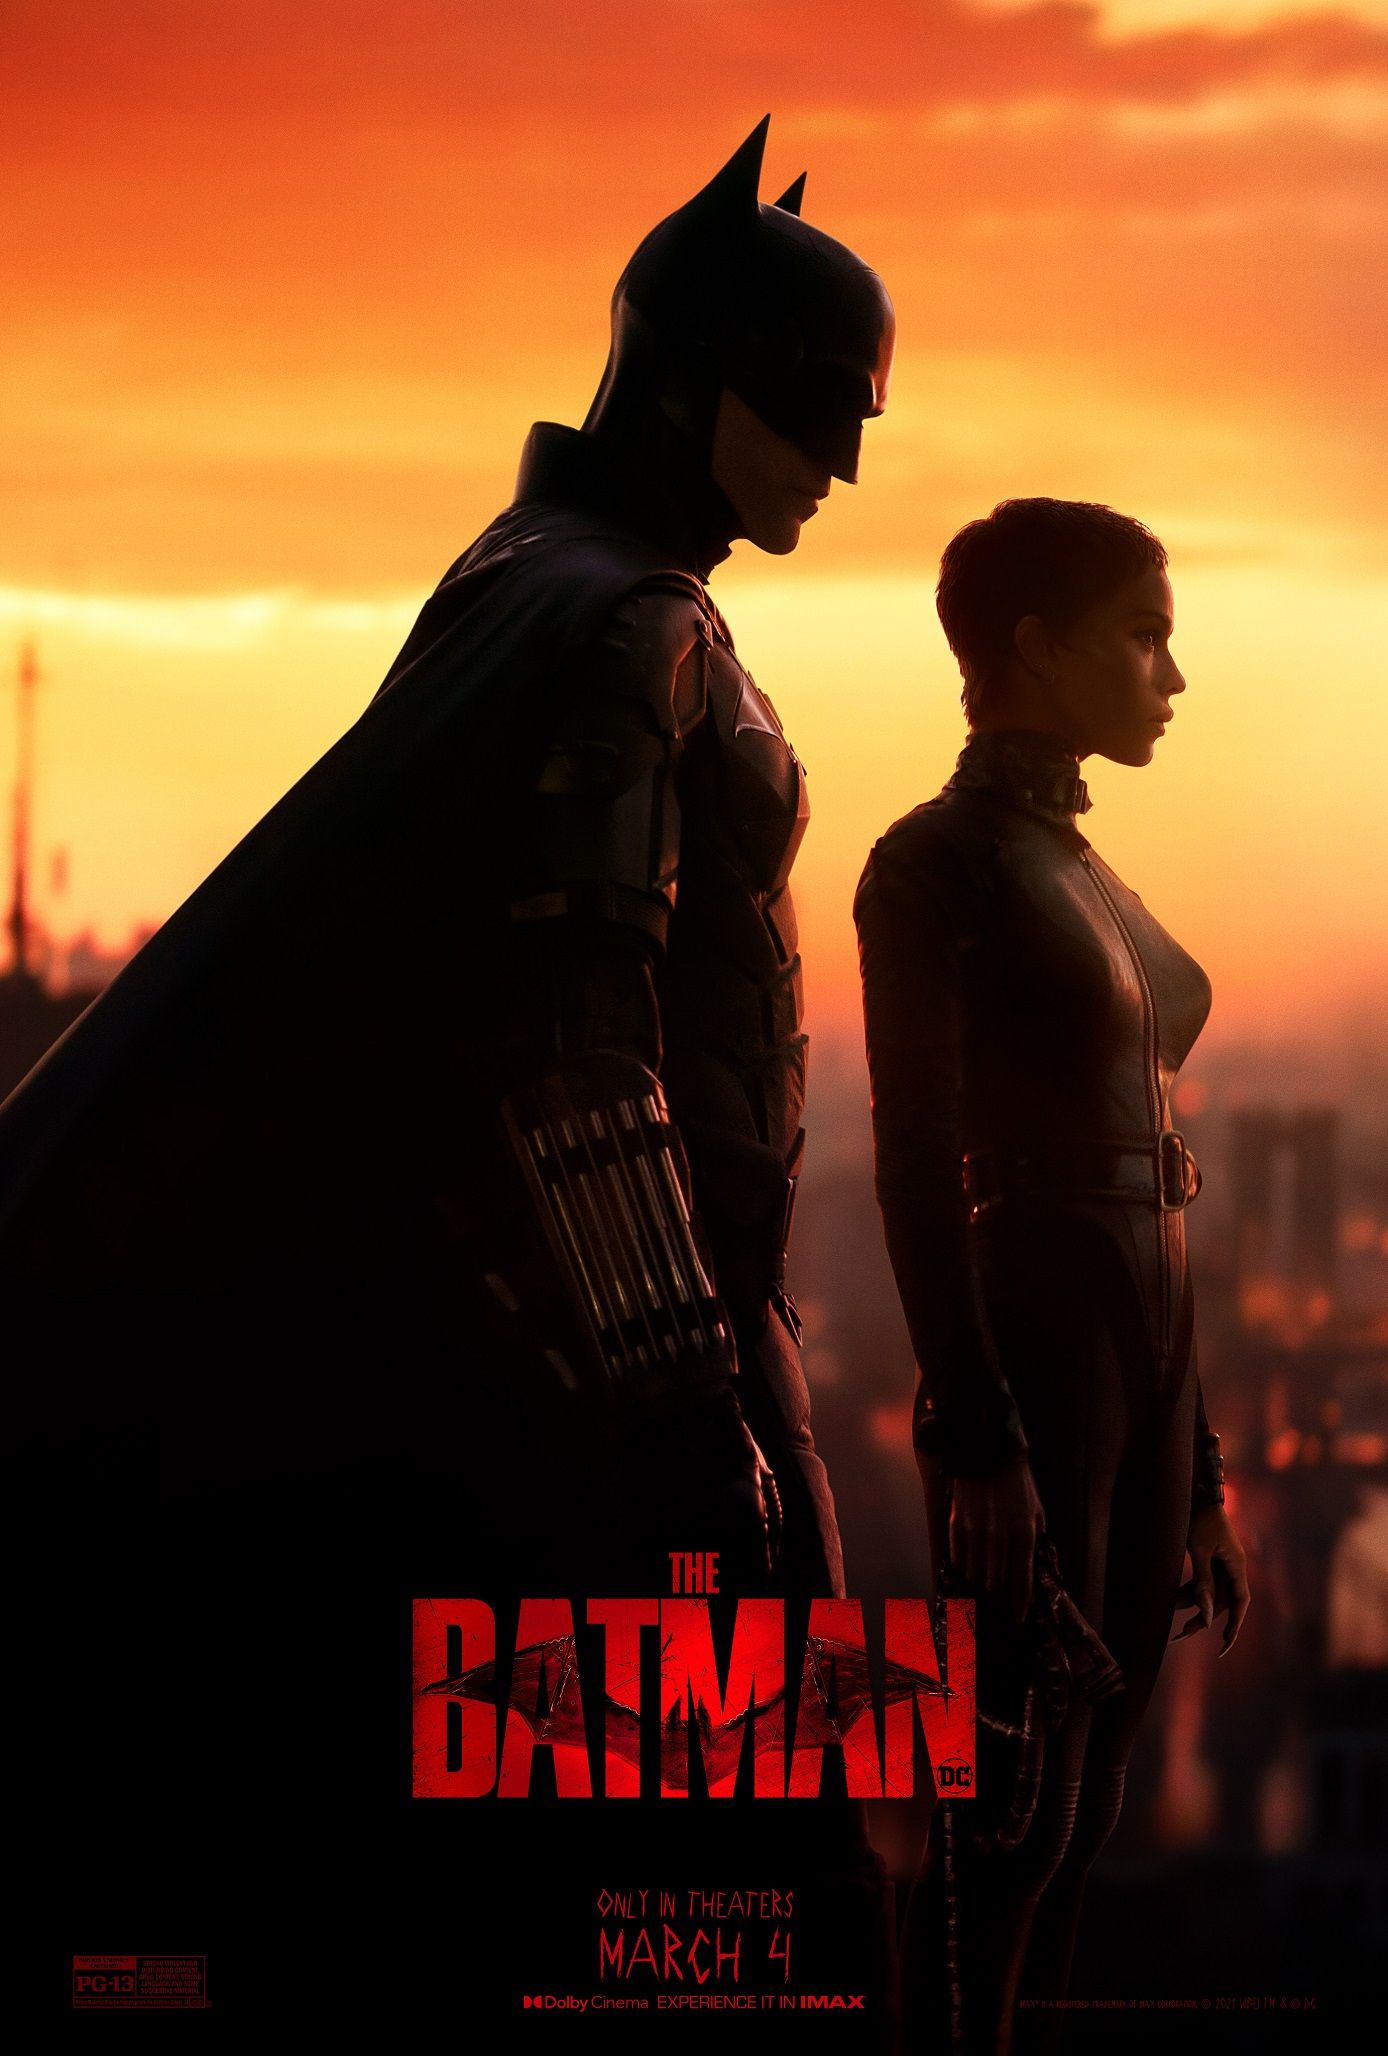 Robert Pattinson as Batman and Zoe Kravitz as Catwoman unmasked